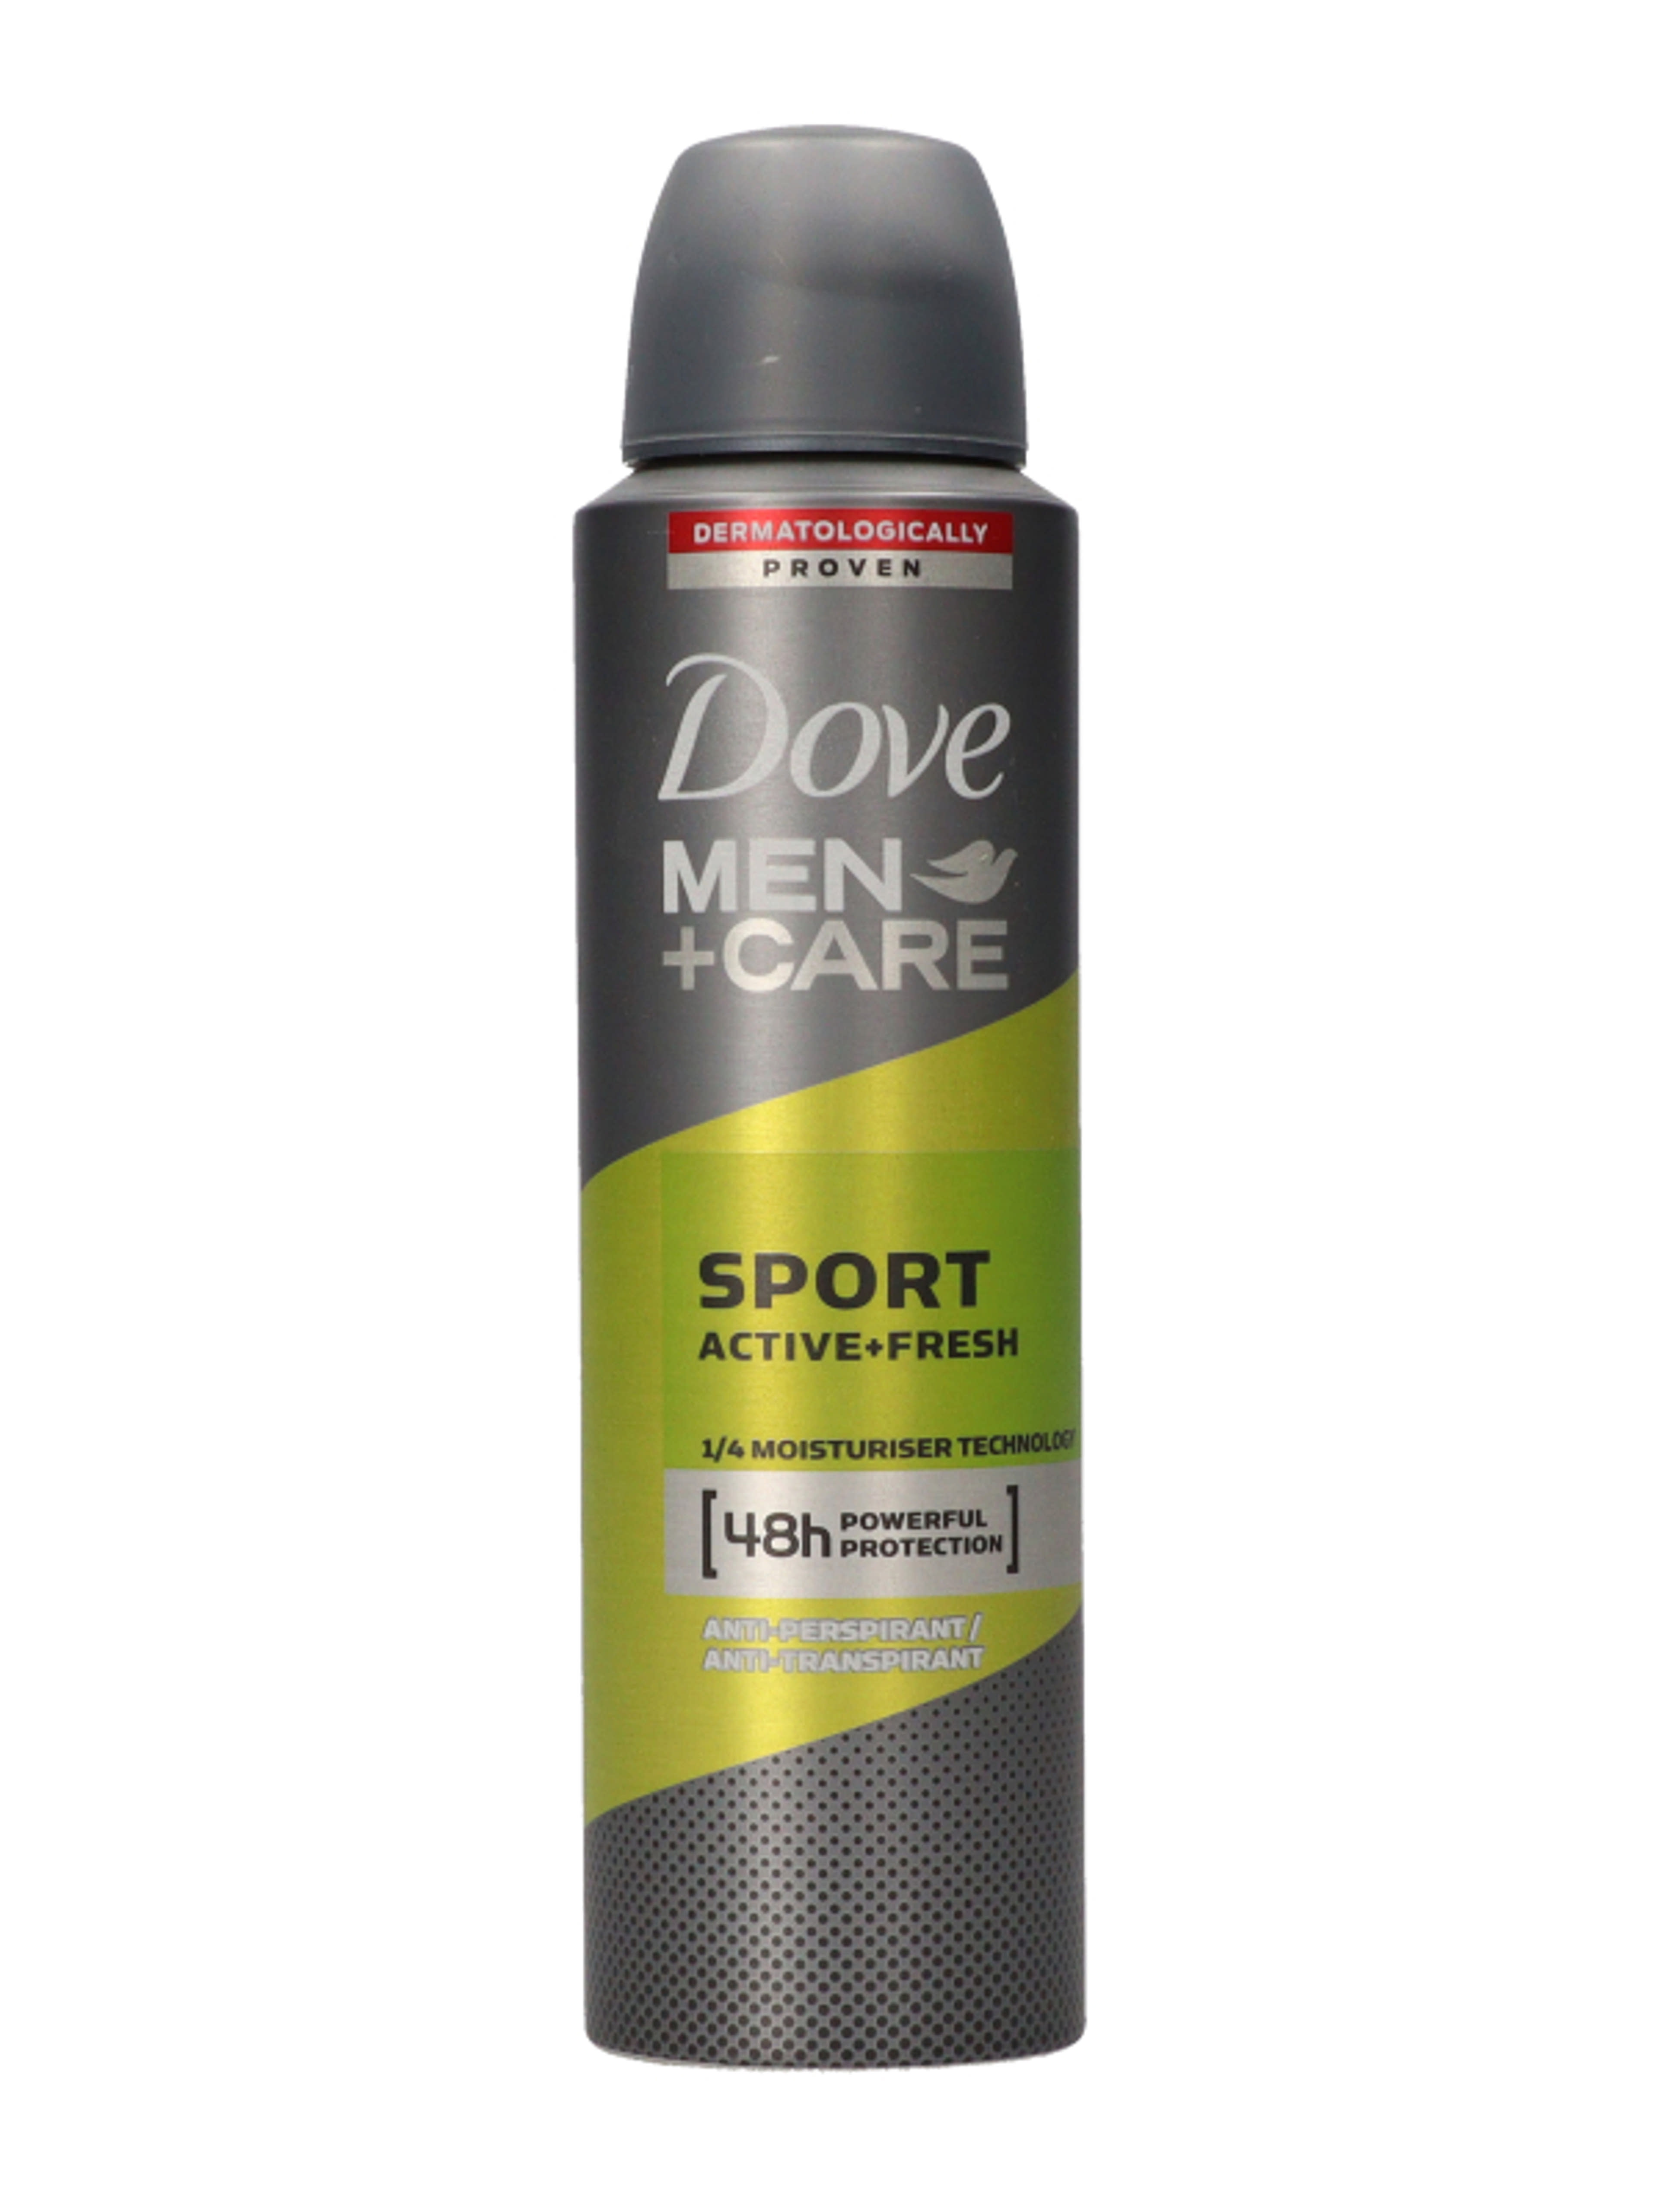 Dove deo men+care sport active fresh - 150 ml-2